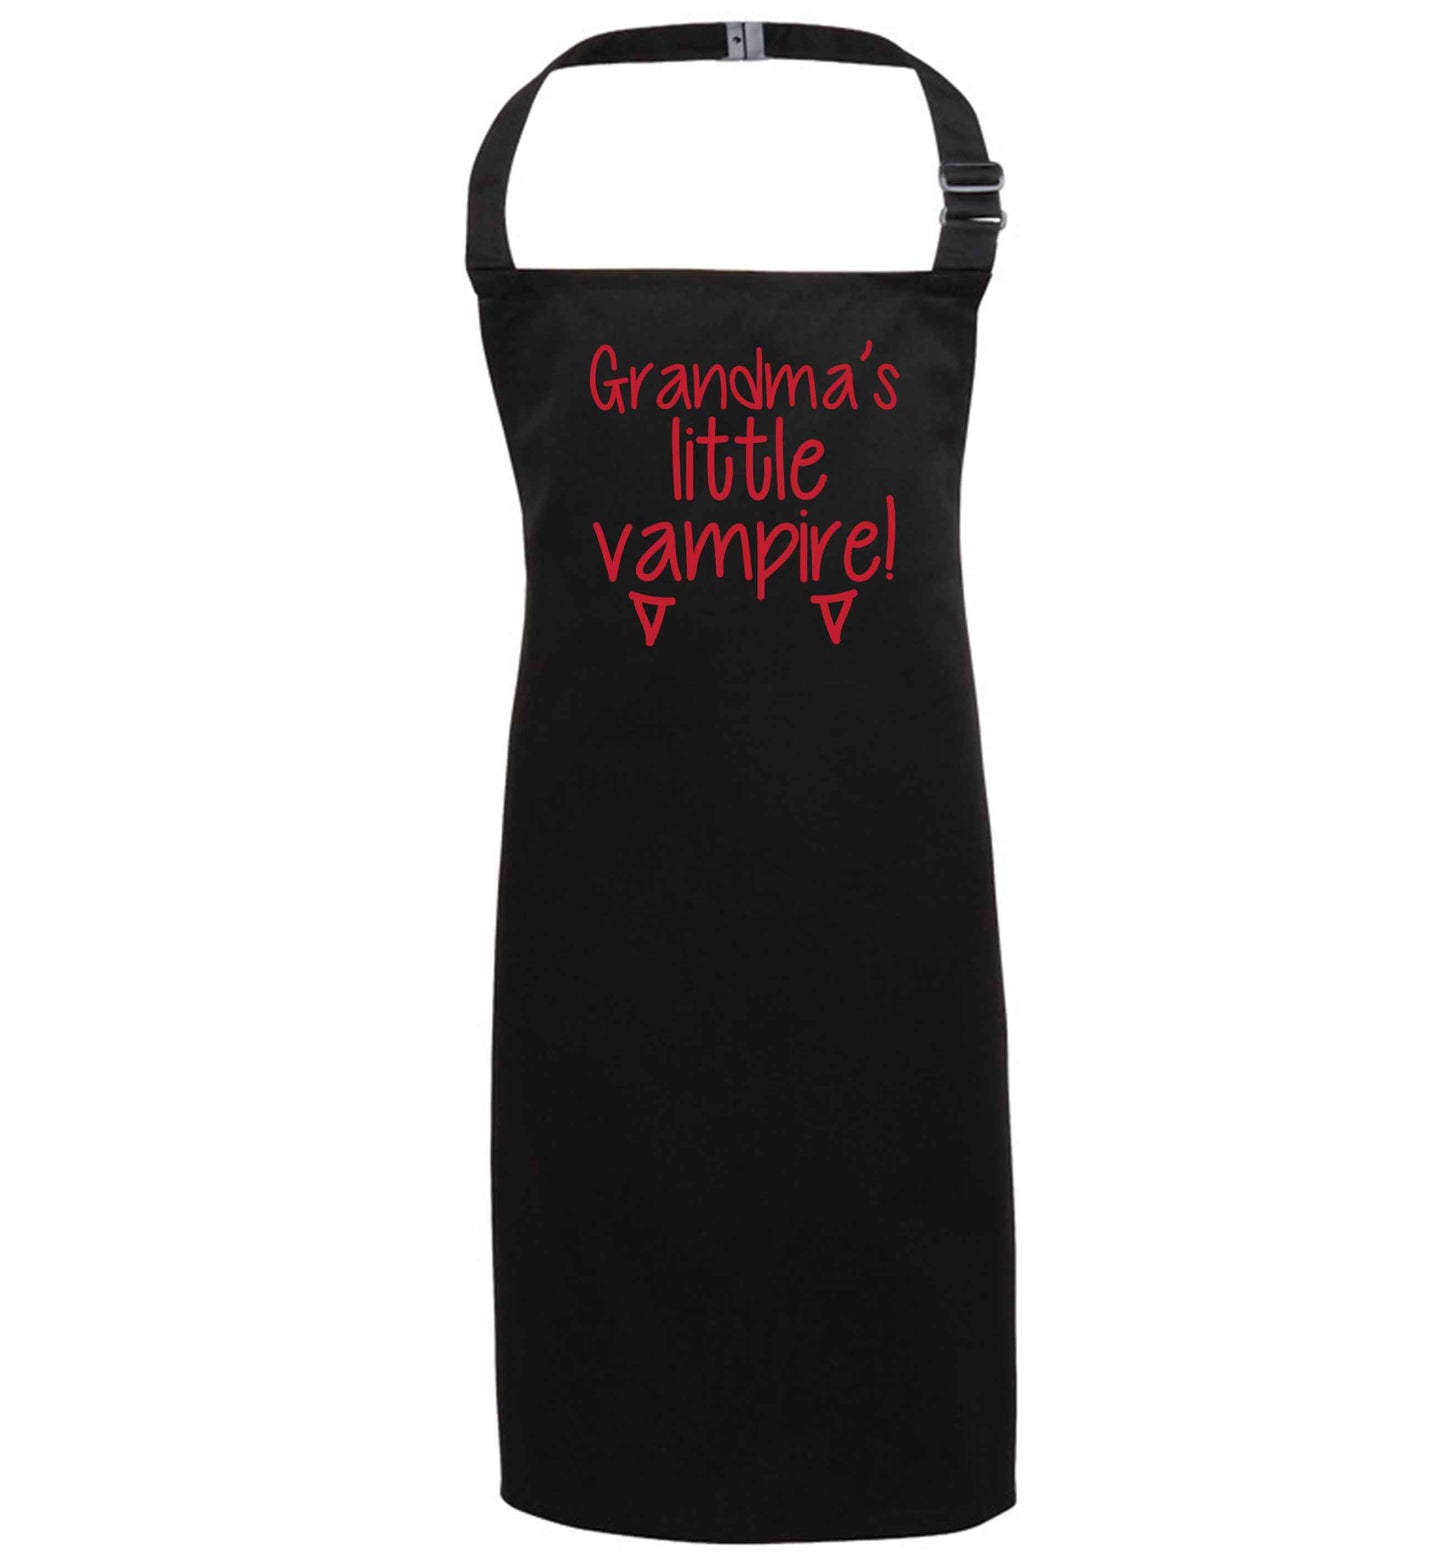 Grandma's little vampire black apron 7-10 years